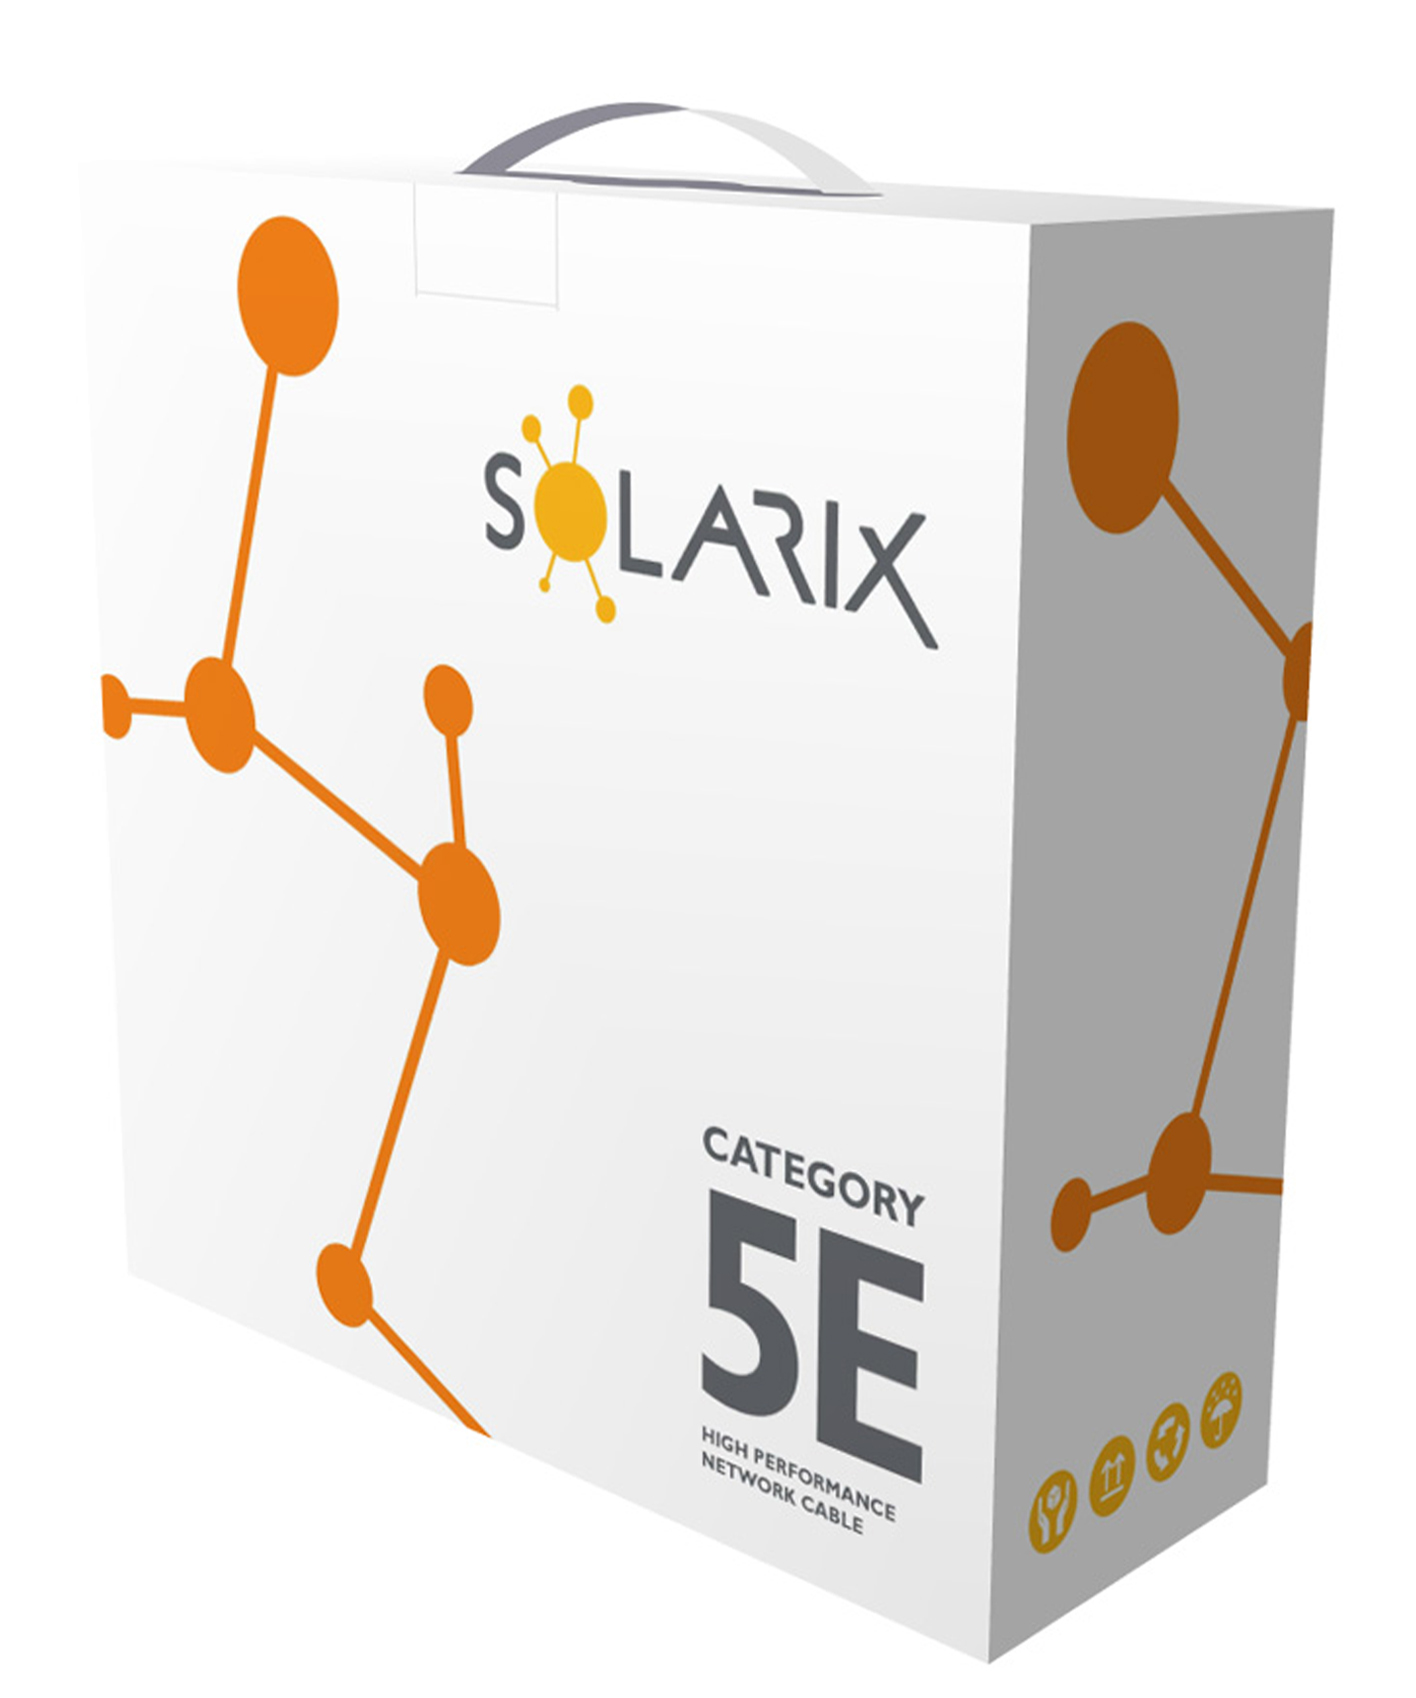 Inštalačný kábel Solarix CAT5E FTP PE Fca vonkajší 100m/ box SXKD-5E-FTP-PE 